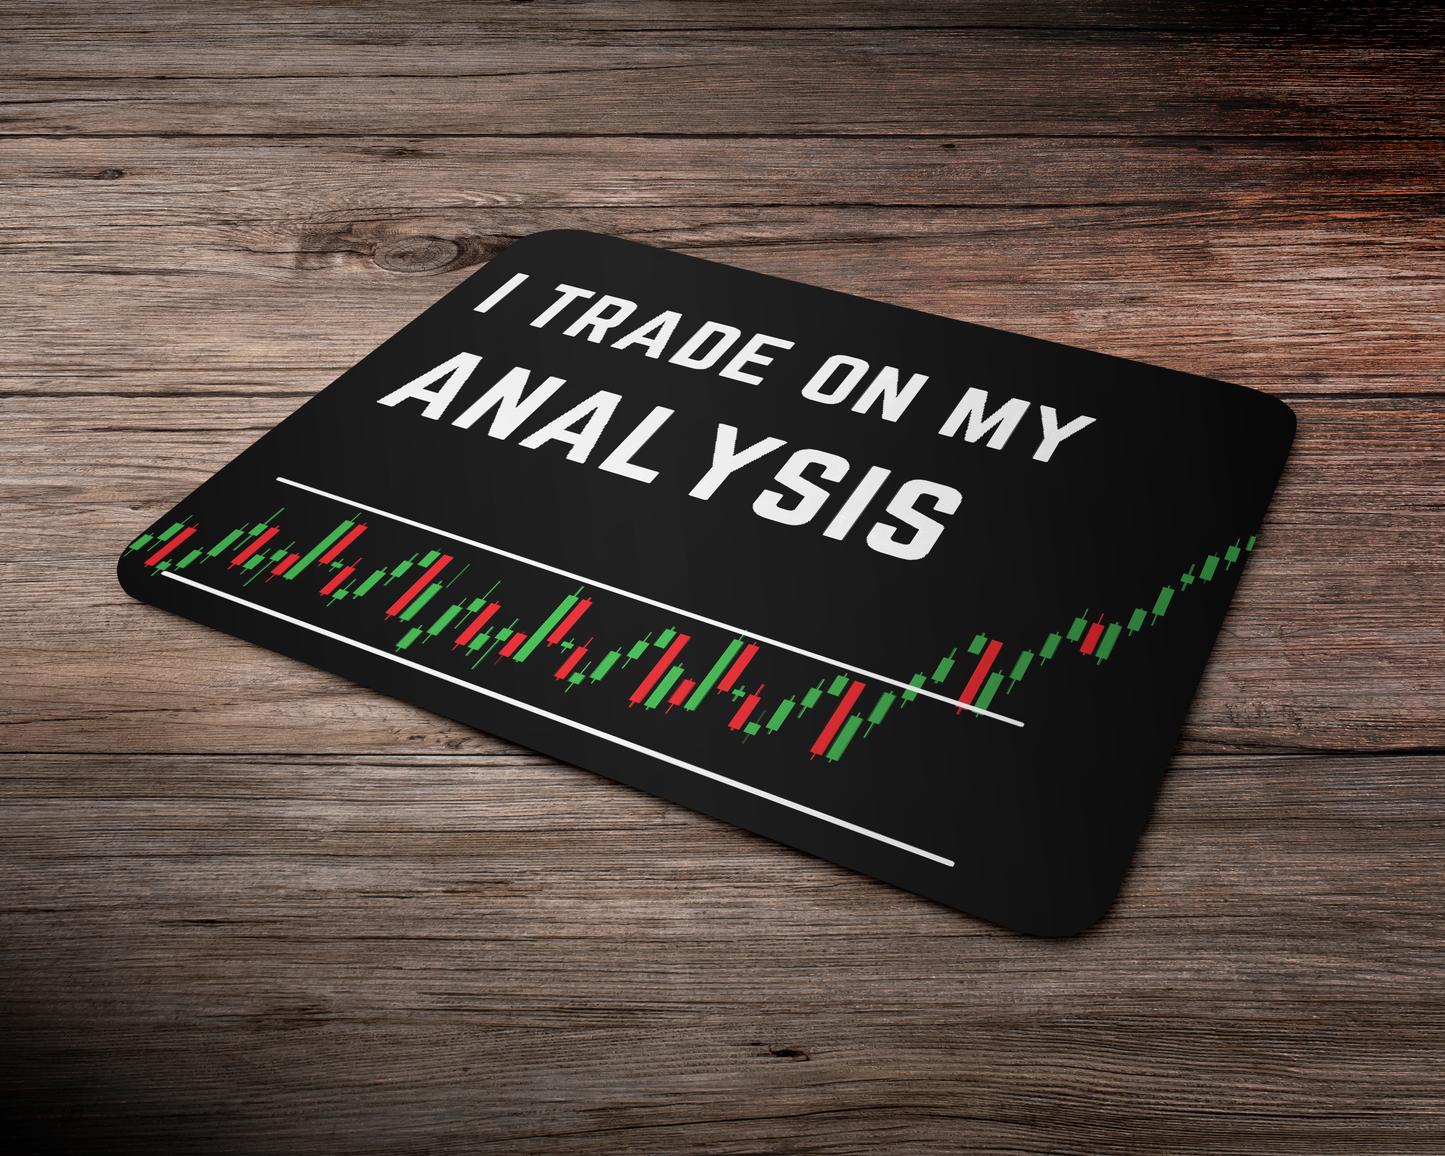 I trade on my Analysis (Mousepad) - tickermart.com